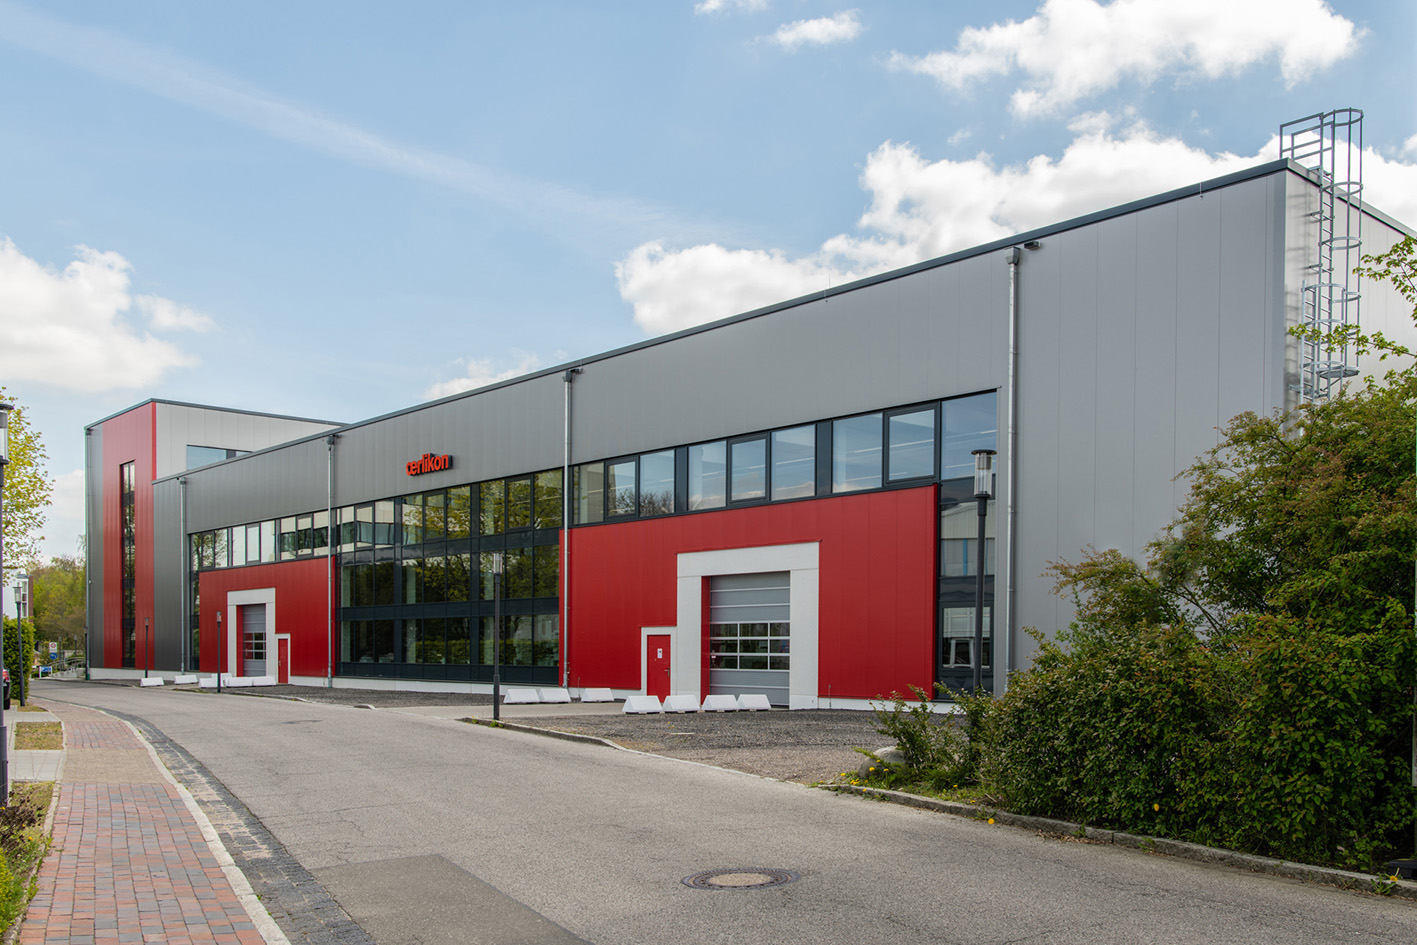 The new staple fibre technology centre in Neumünster